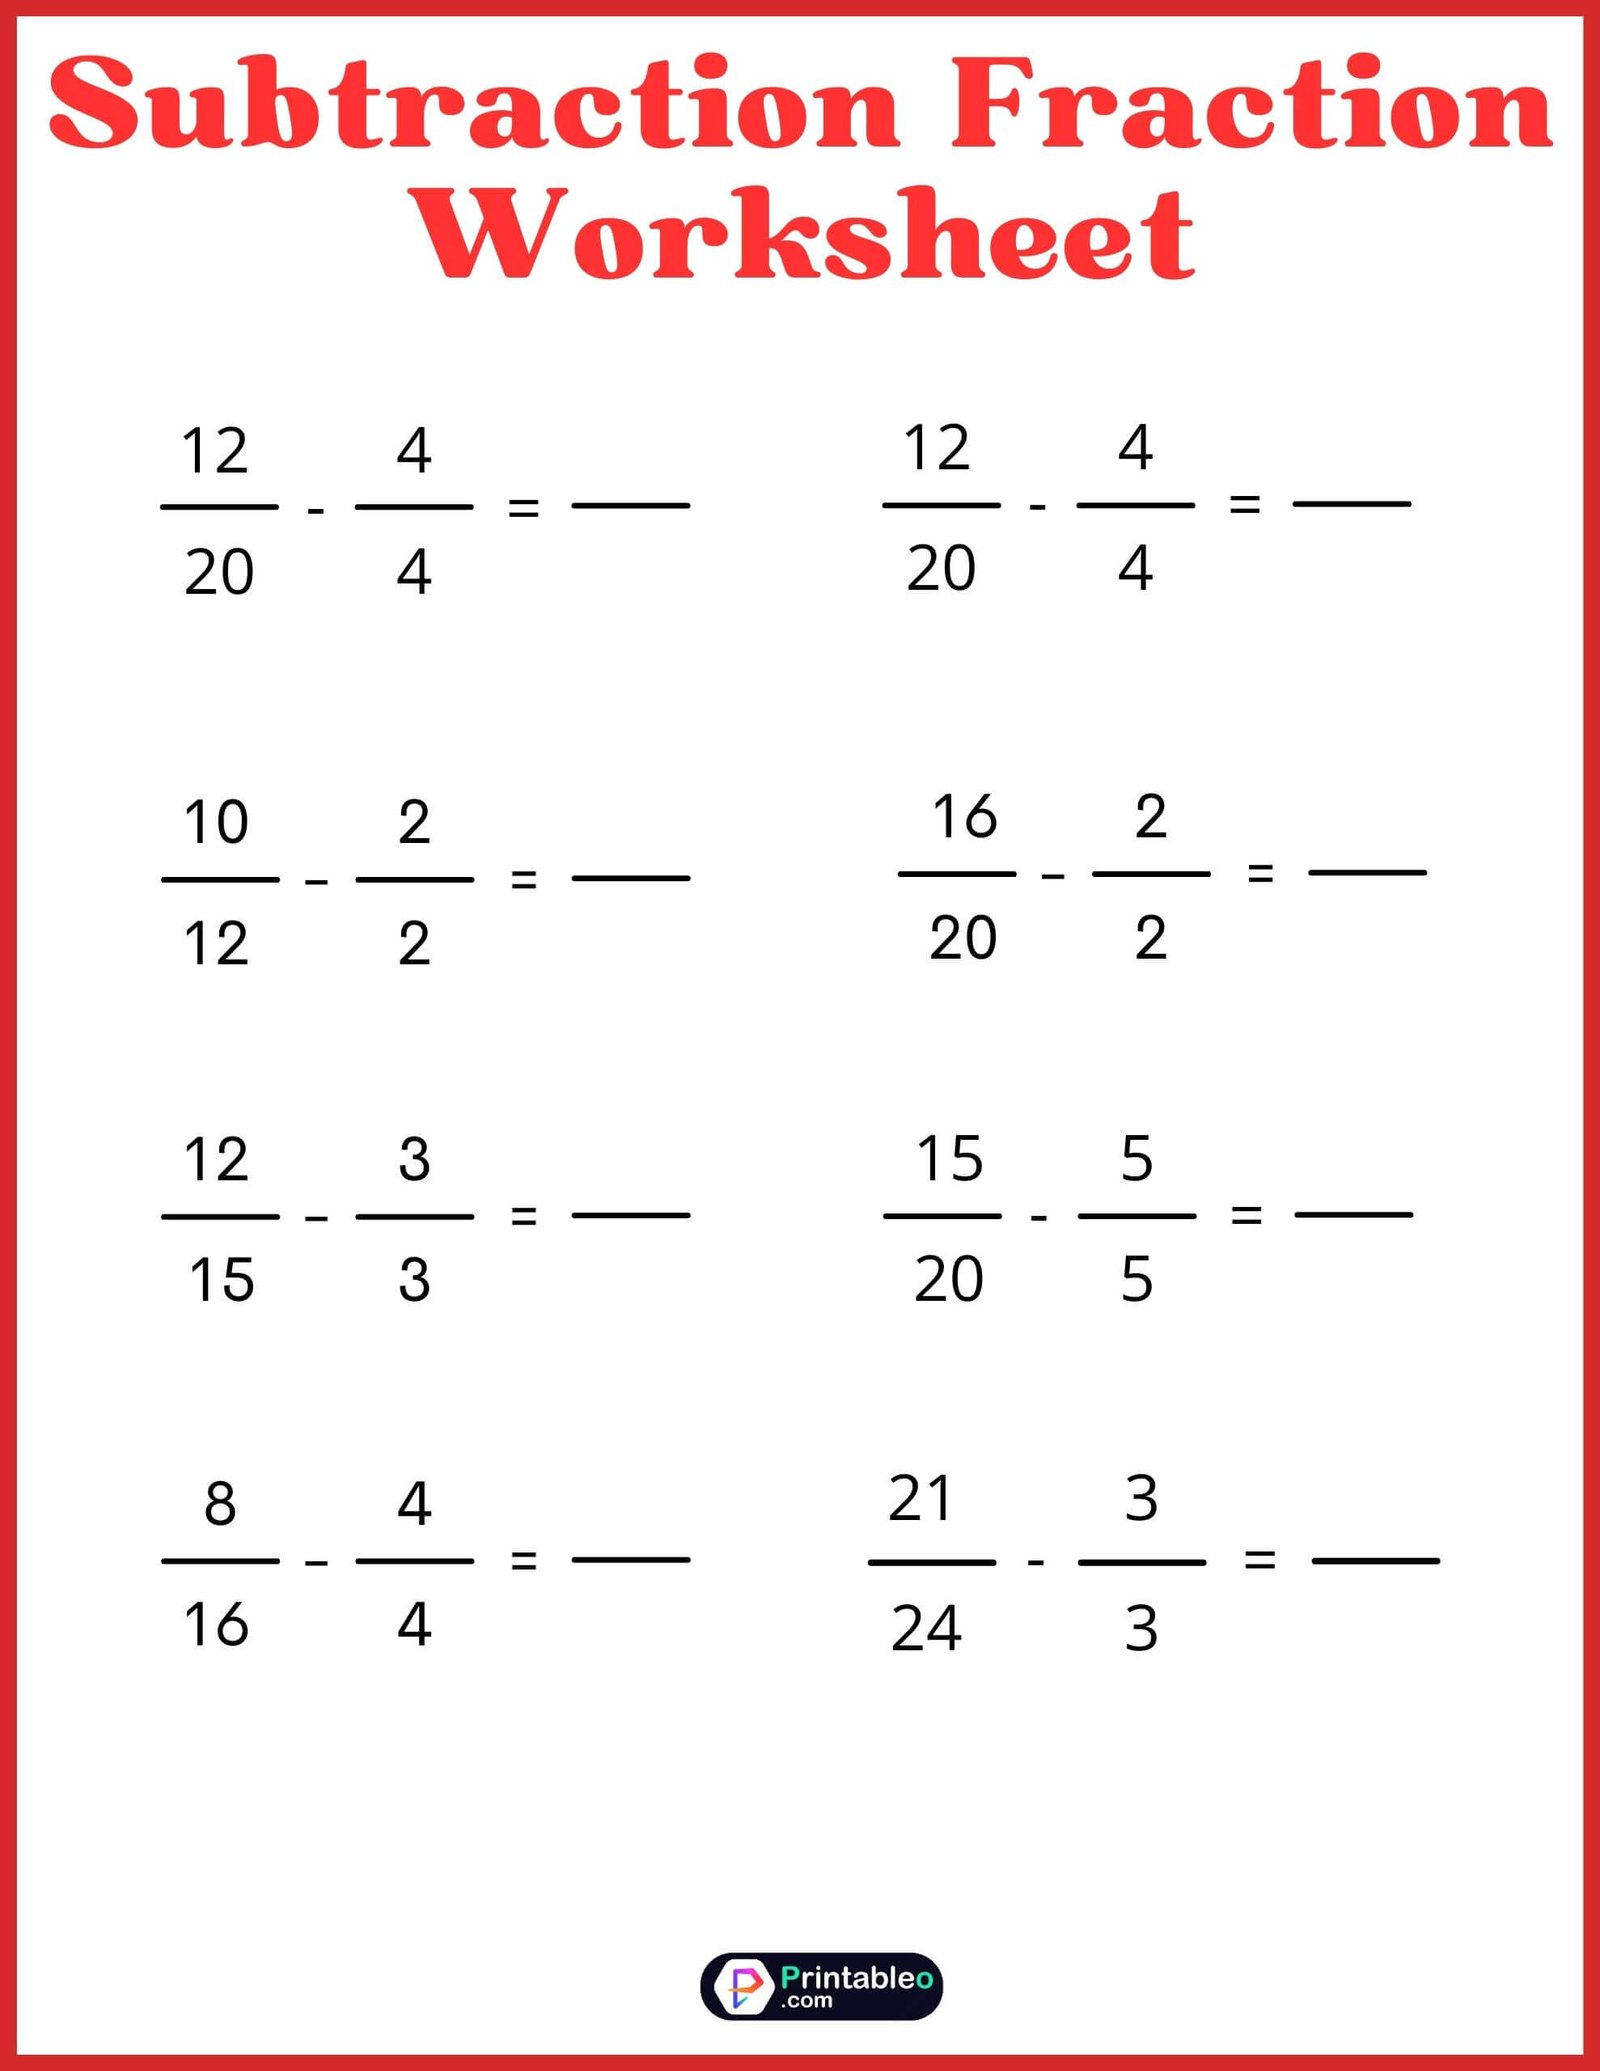 Subtraction Fraction Worksheet For 4th Grade